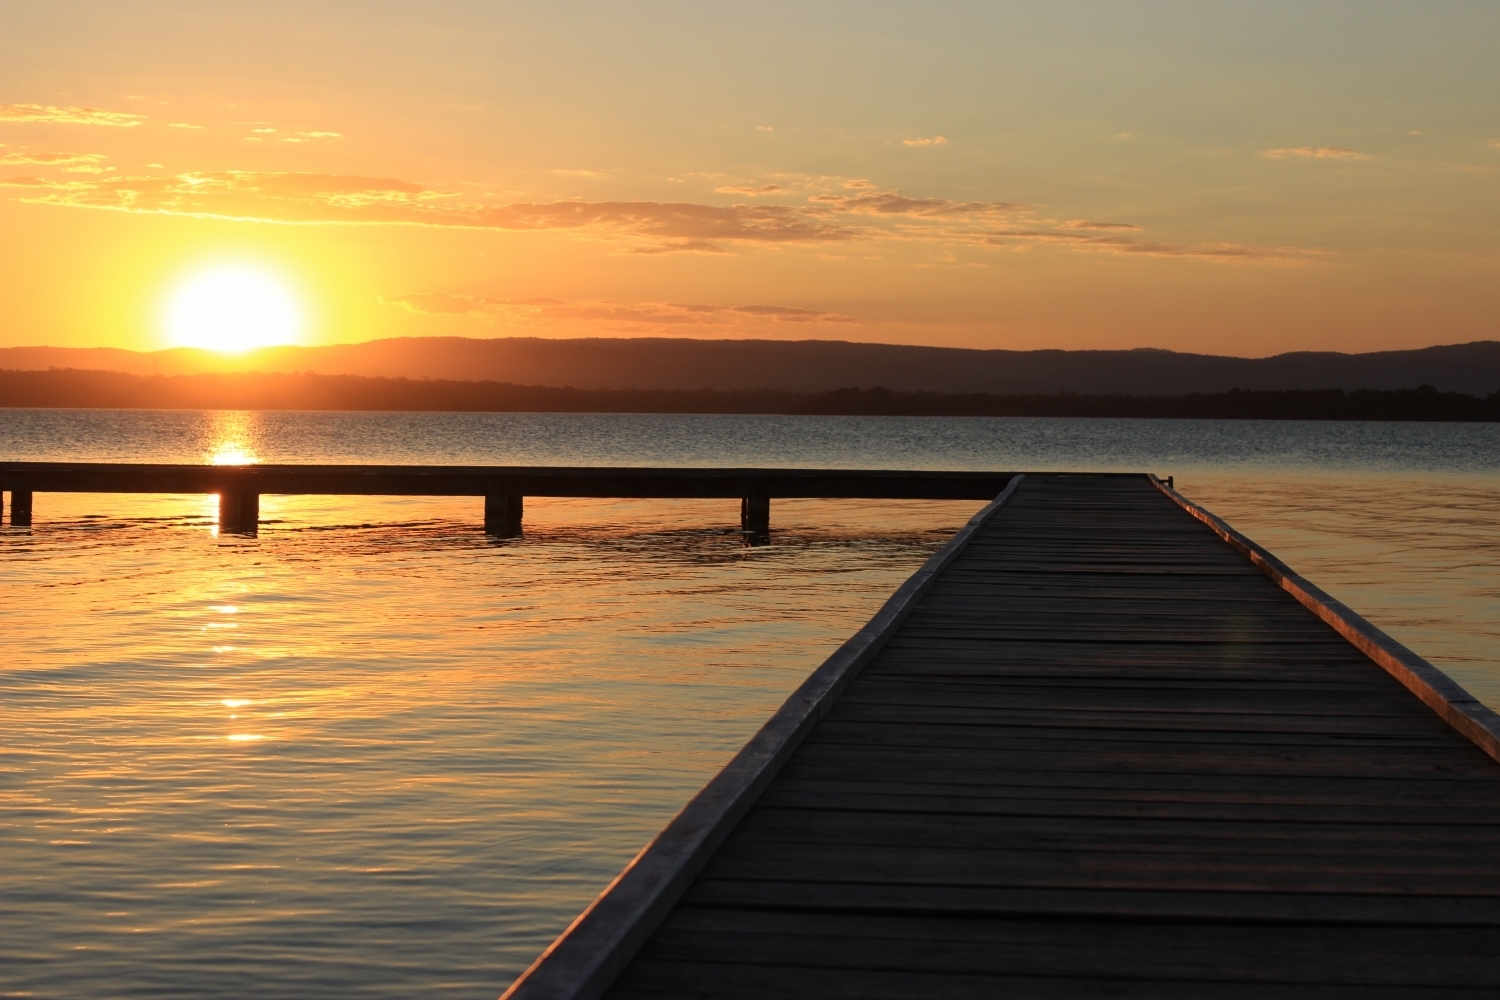 Lake Macquarie at sunset